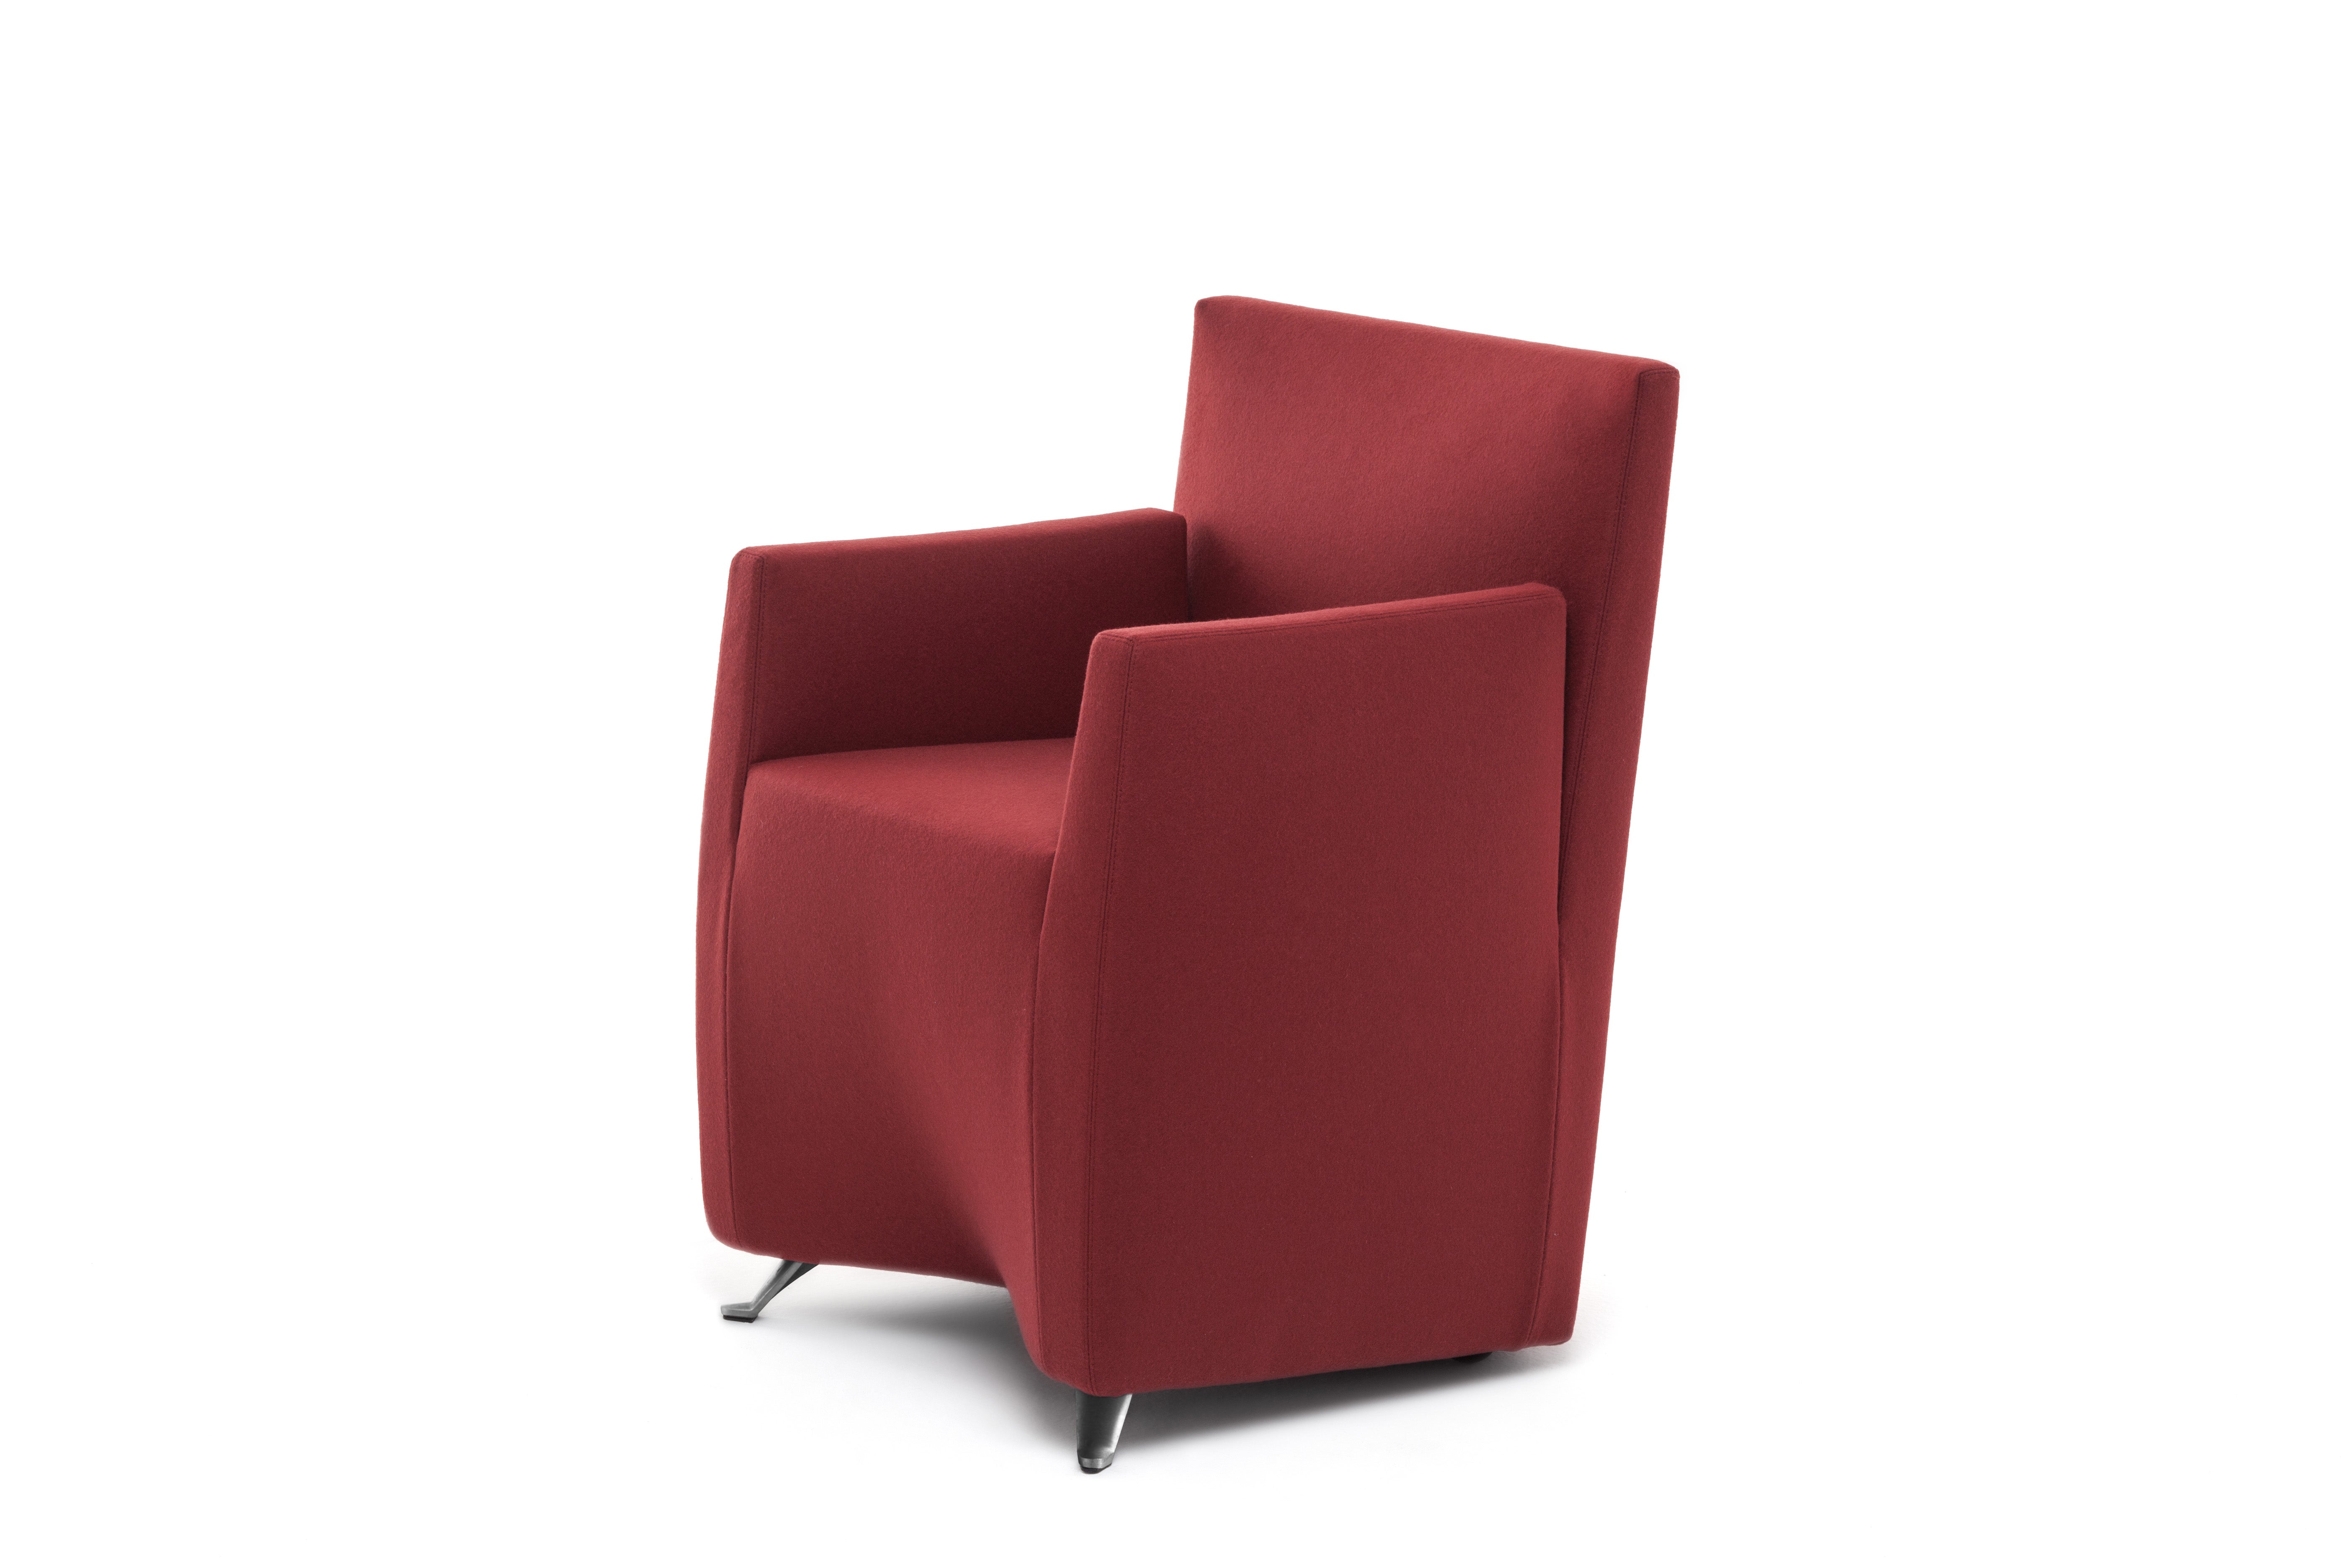  Baleri Italia Caprichair Armchair in Red Fabric by Hannes Wettstein